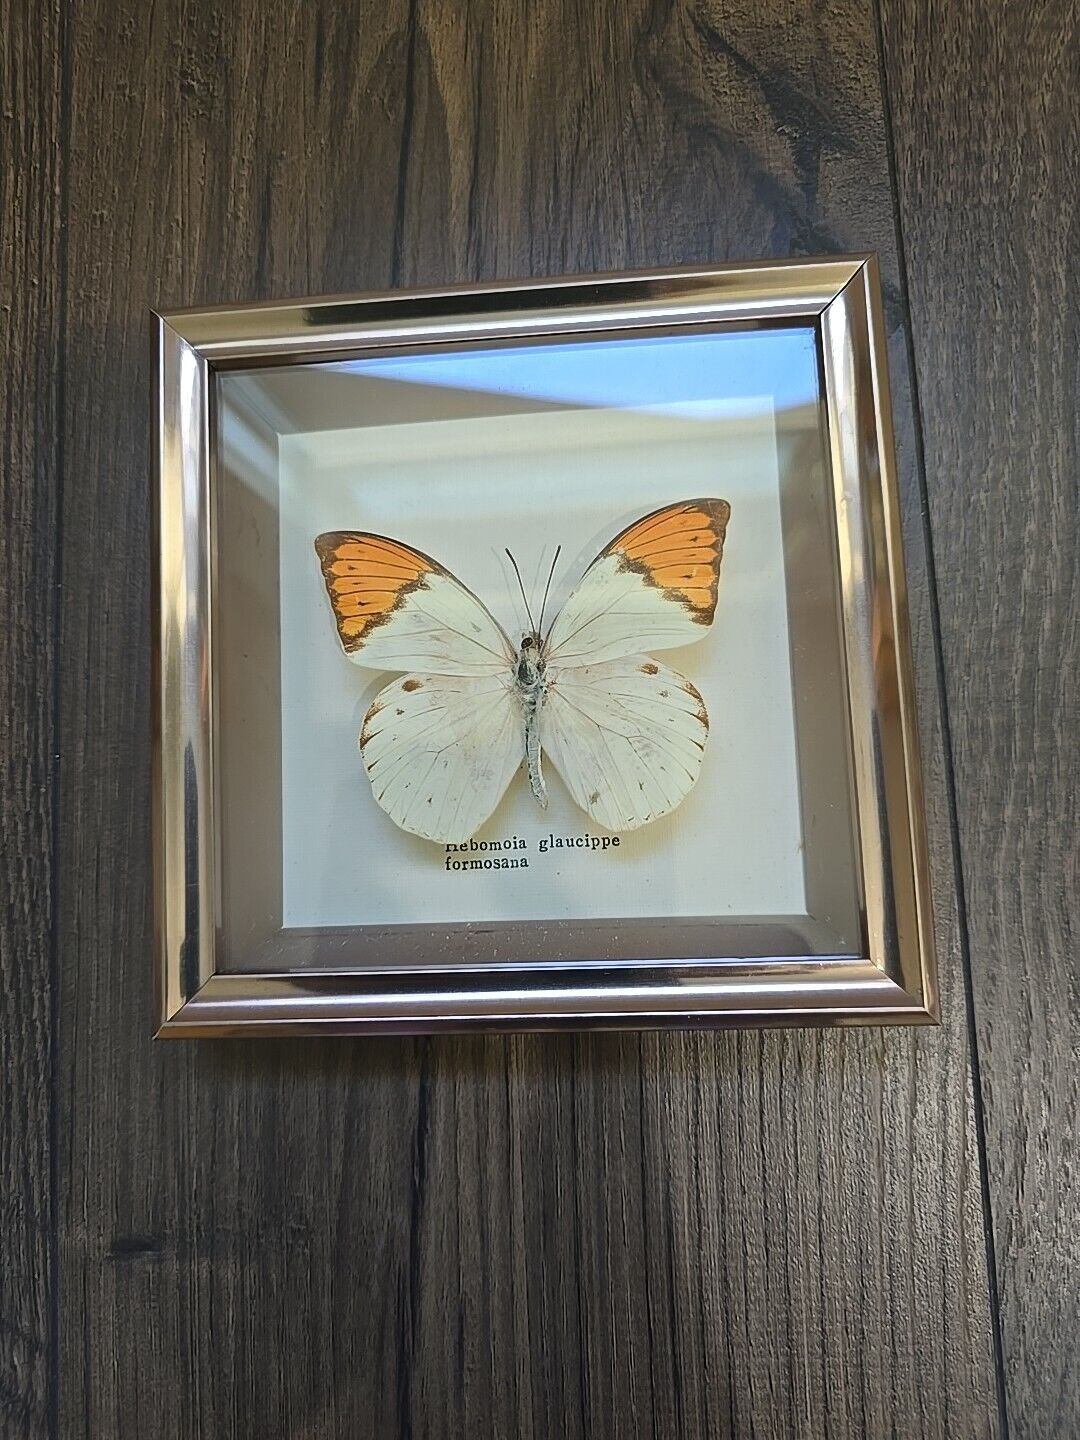 Vintage Framed Preserved Butterfly Hebomoia glaucippe formosana